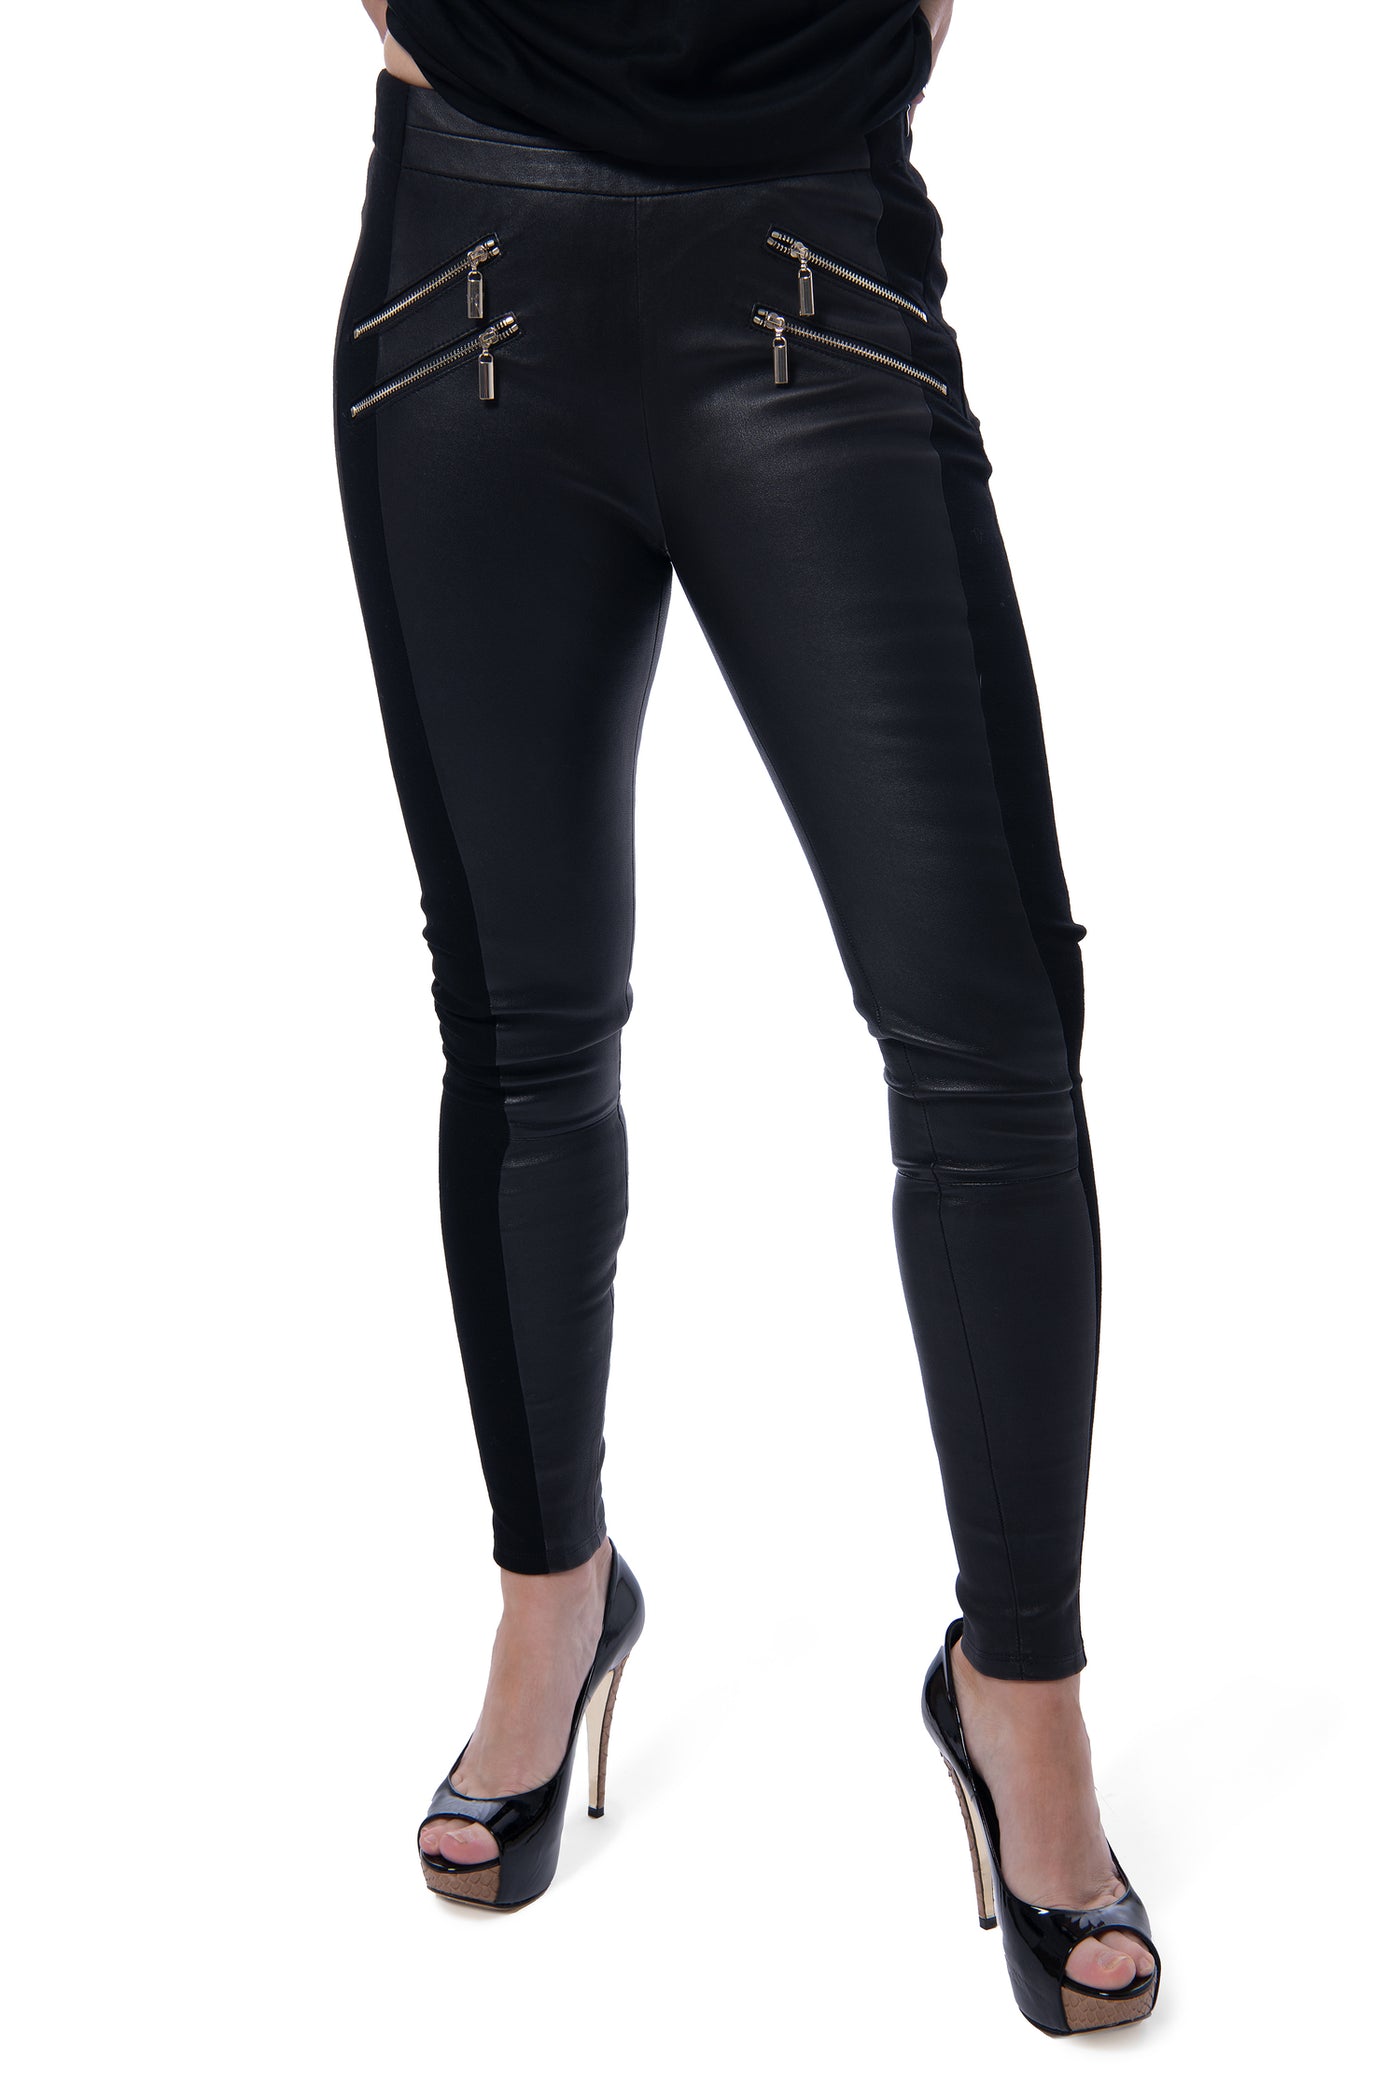 SPEZIALE Peruna Black Leather Trousers